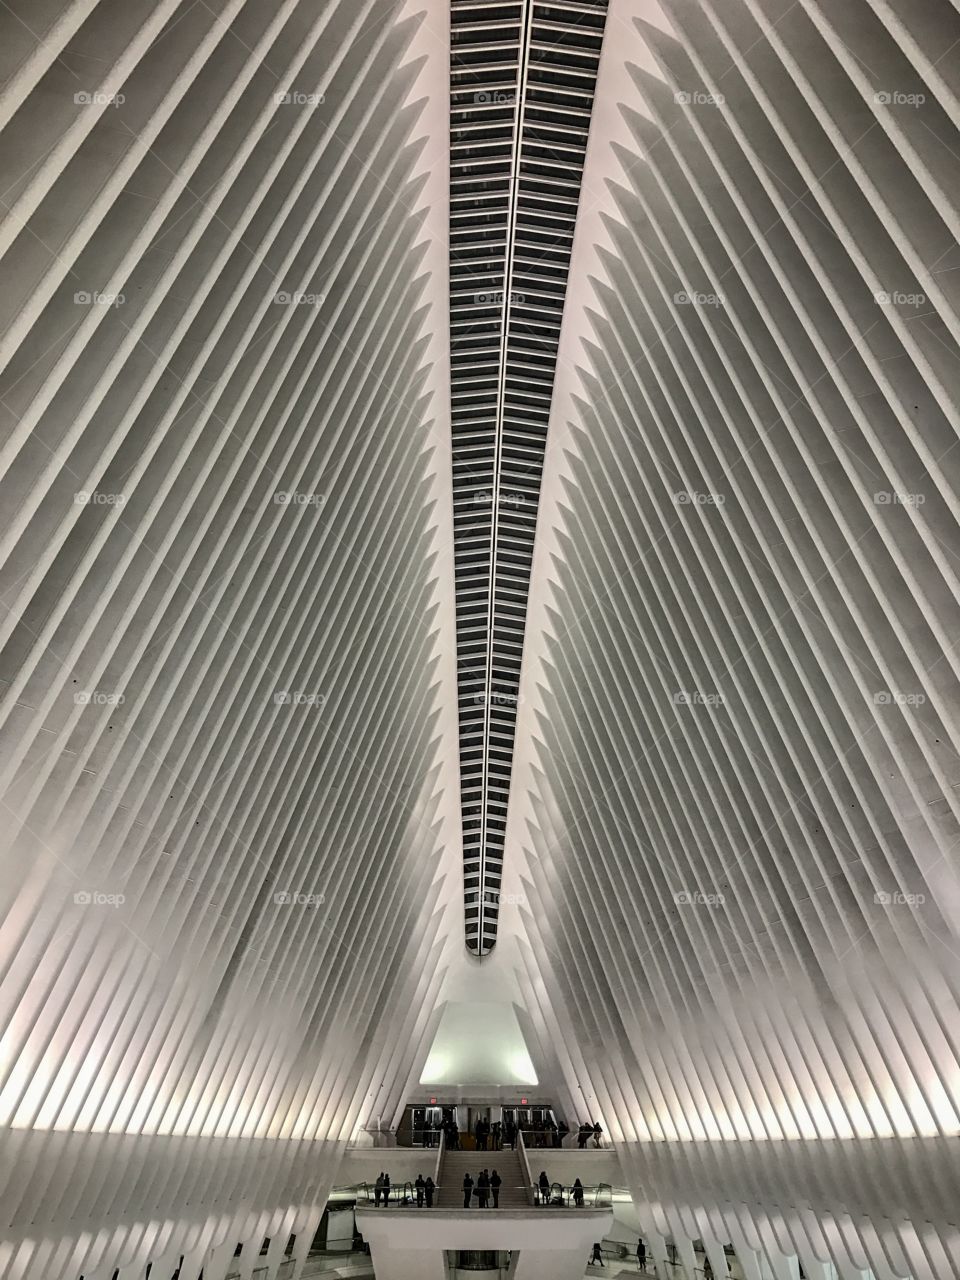 The inside of oculus in manhattan, New York